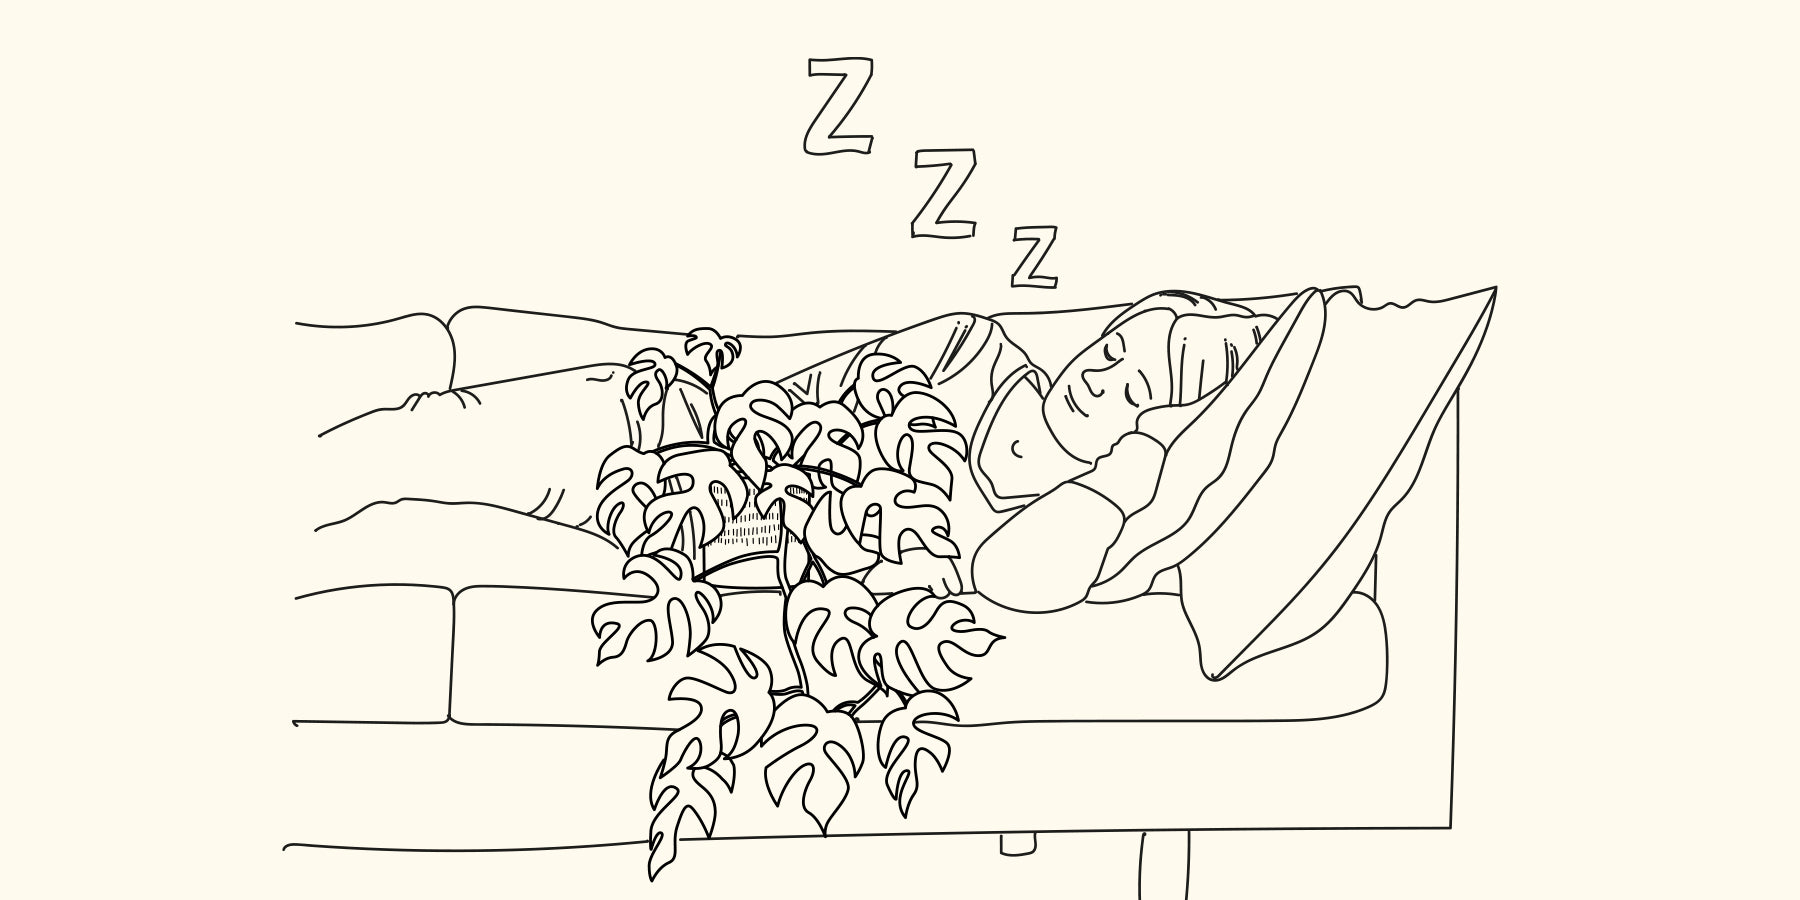 Sleeping with Plants.